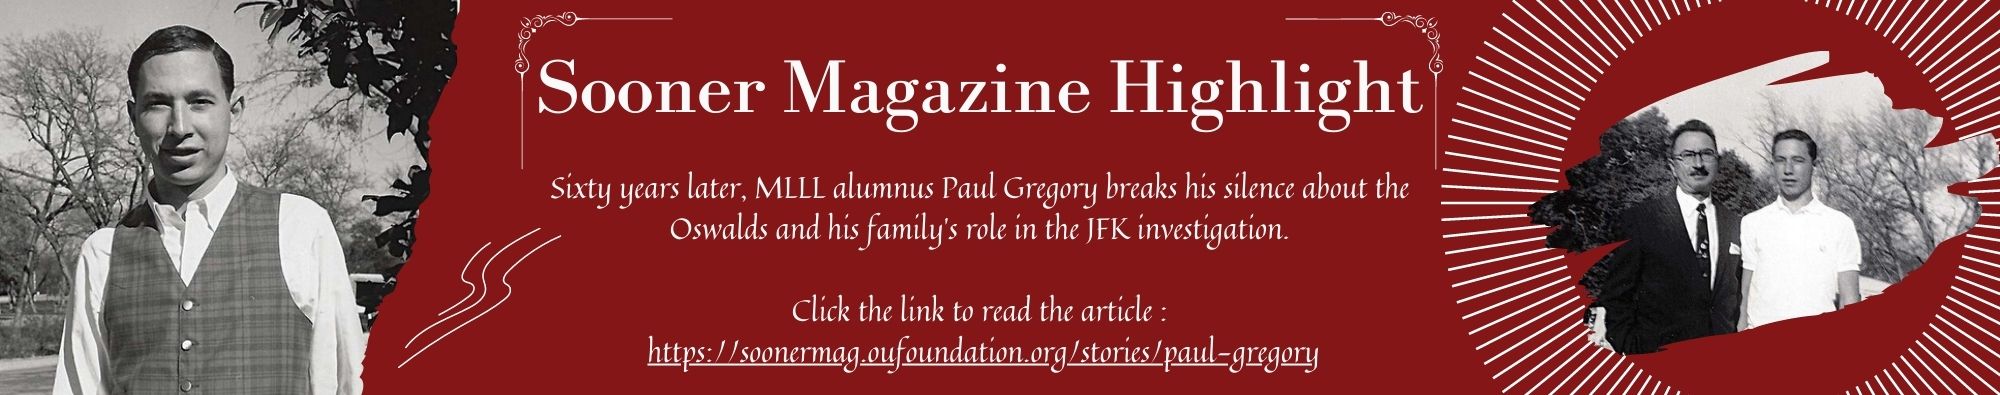 Banner showing Sooner Magazine higlight about MLLL alumnus Paul Gregroy.